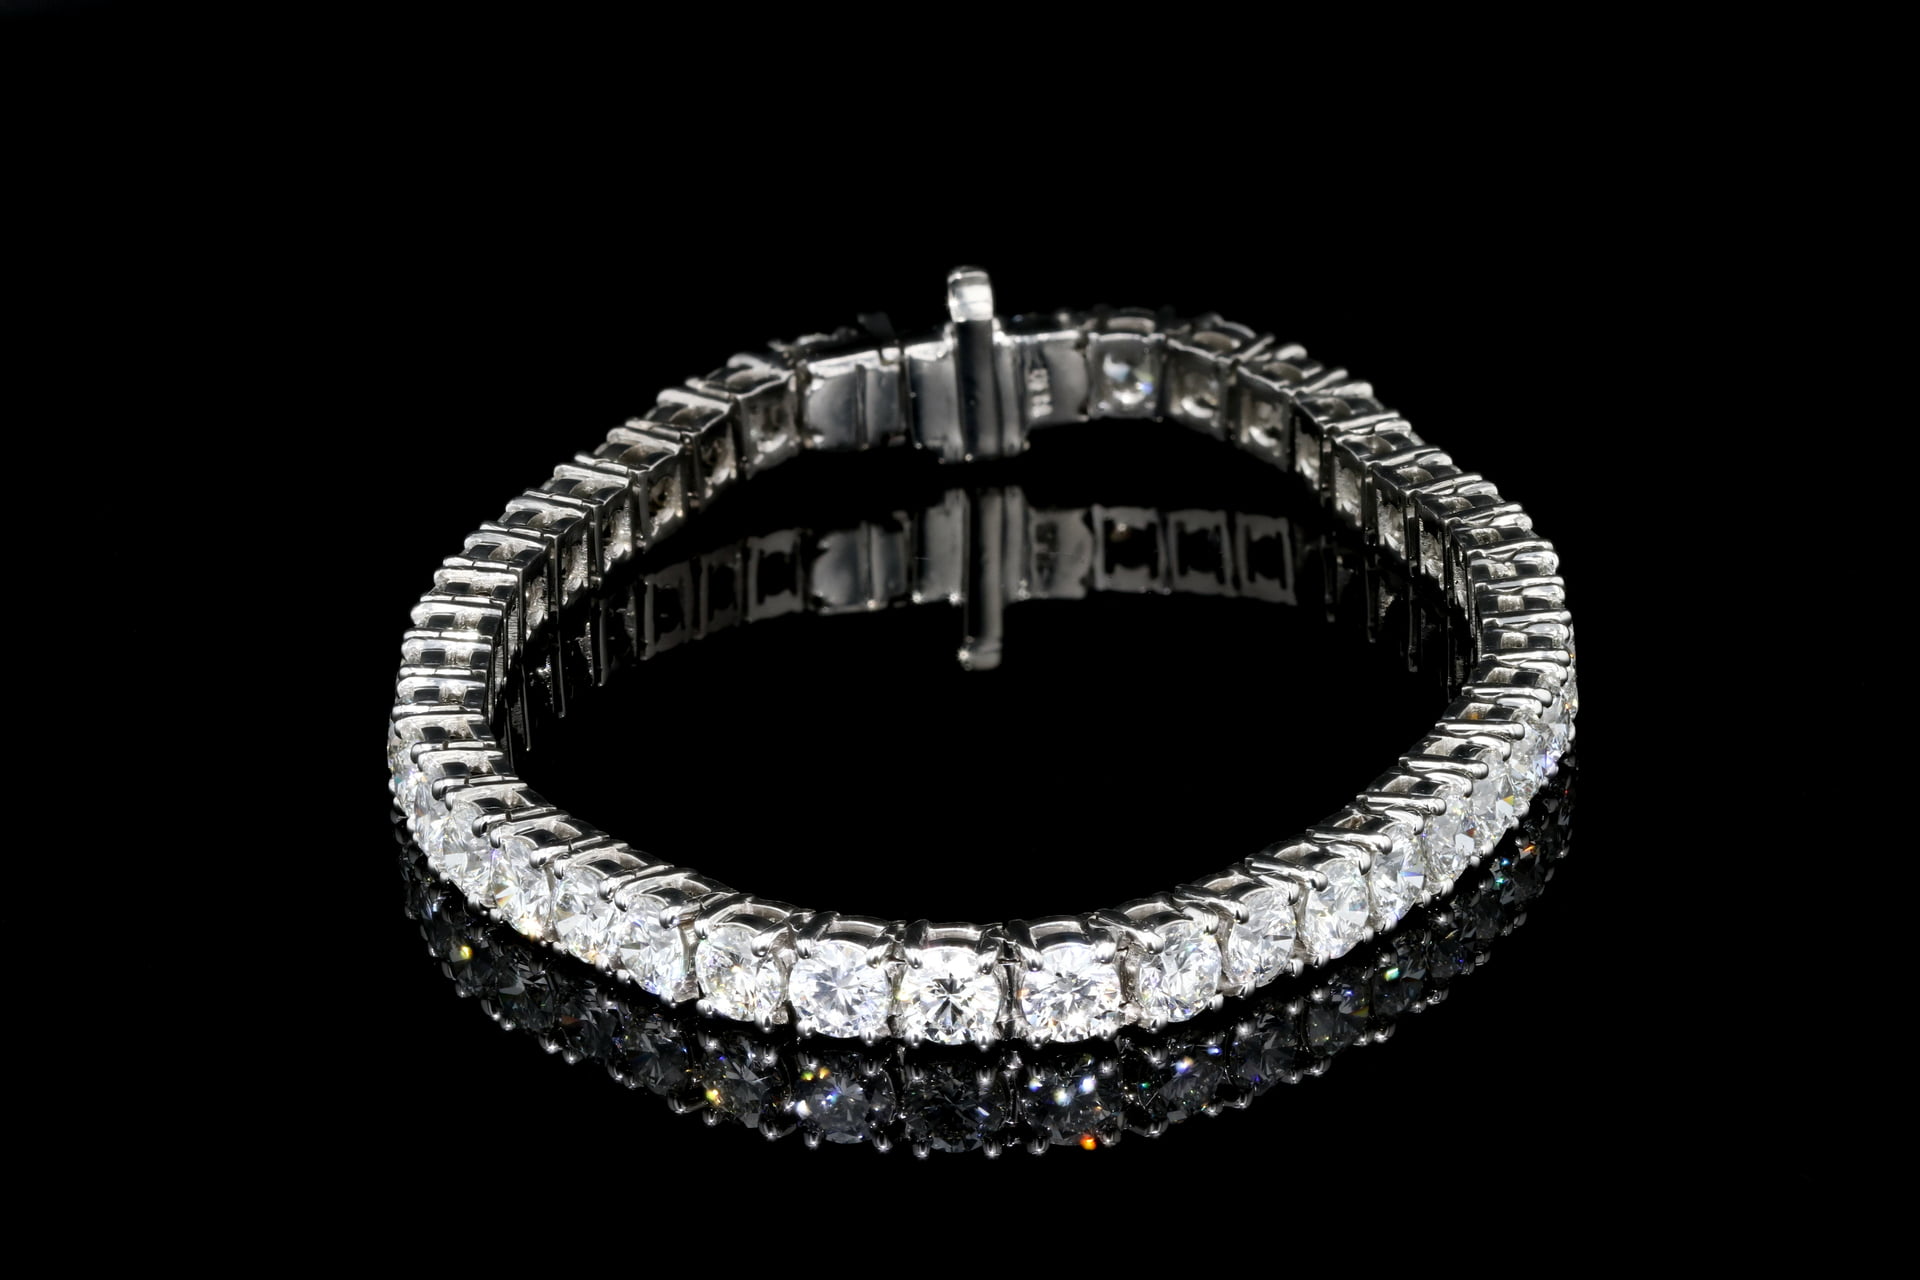 Estate Jewelry Platinum Diamond Tennis Bracelet By Harry Winston - Estate  Jewelry | Manfredi Jewels